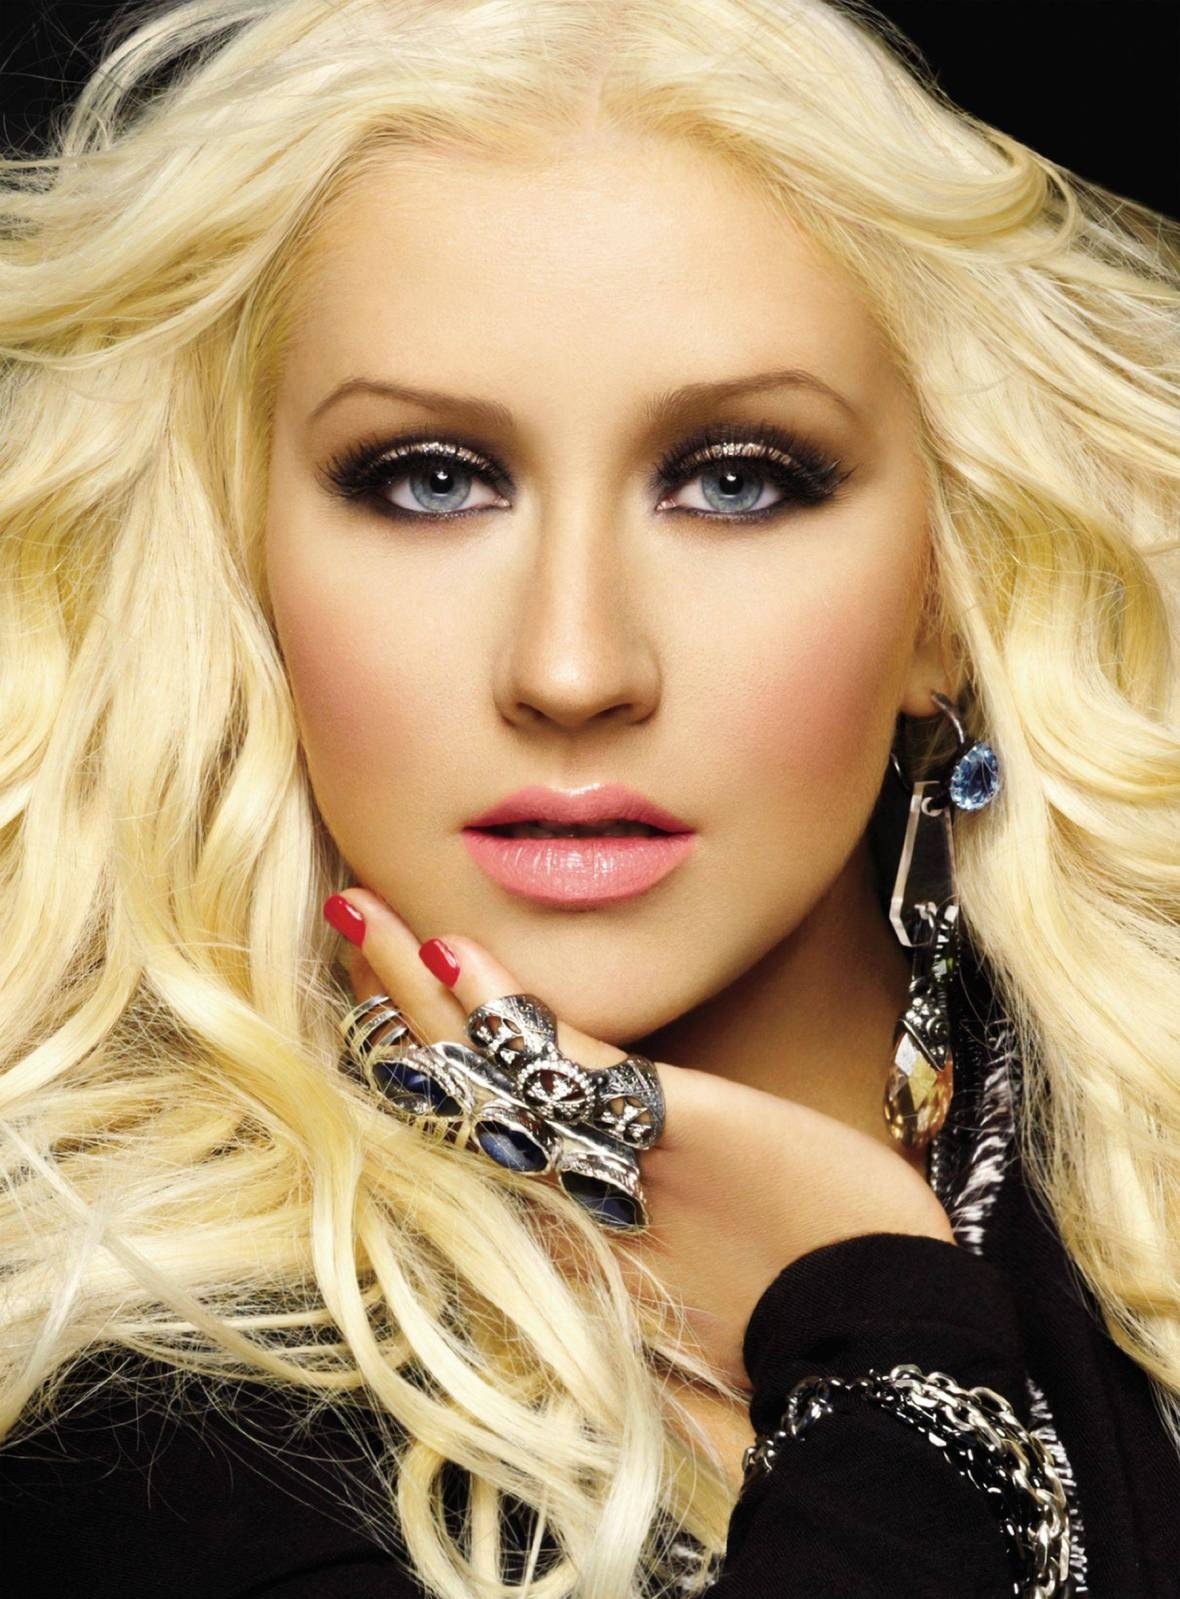 Christina Aguilera photo 4212 of 10819 pics, wallpaper - photo #470887 ...